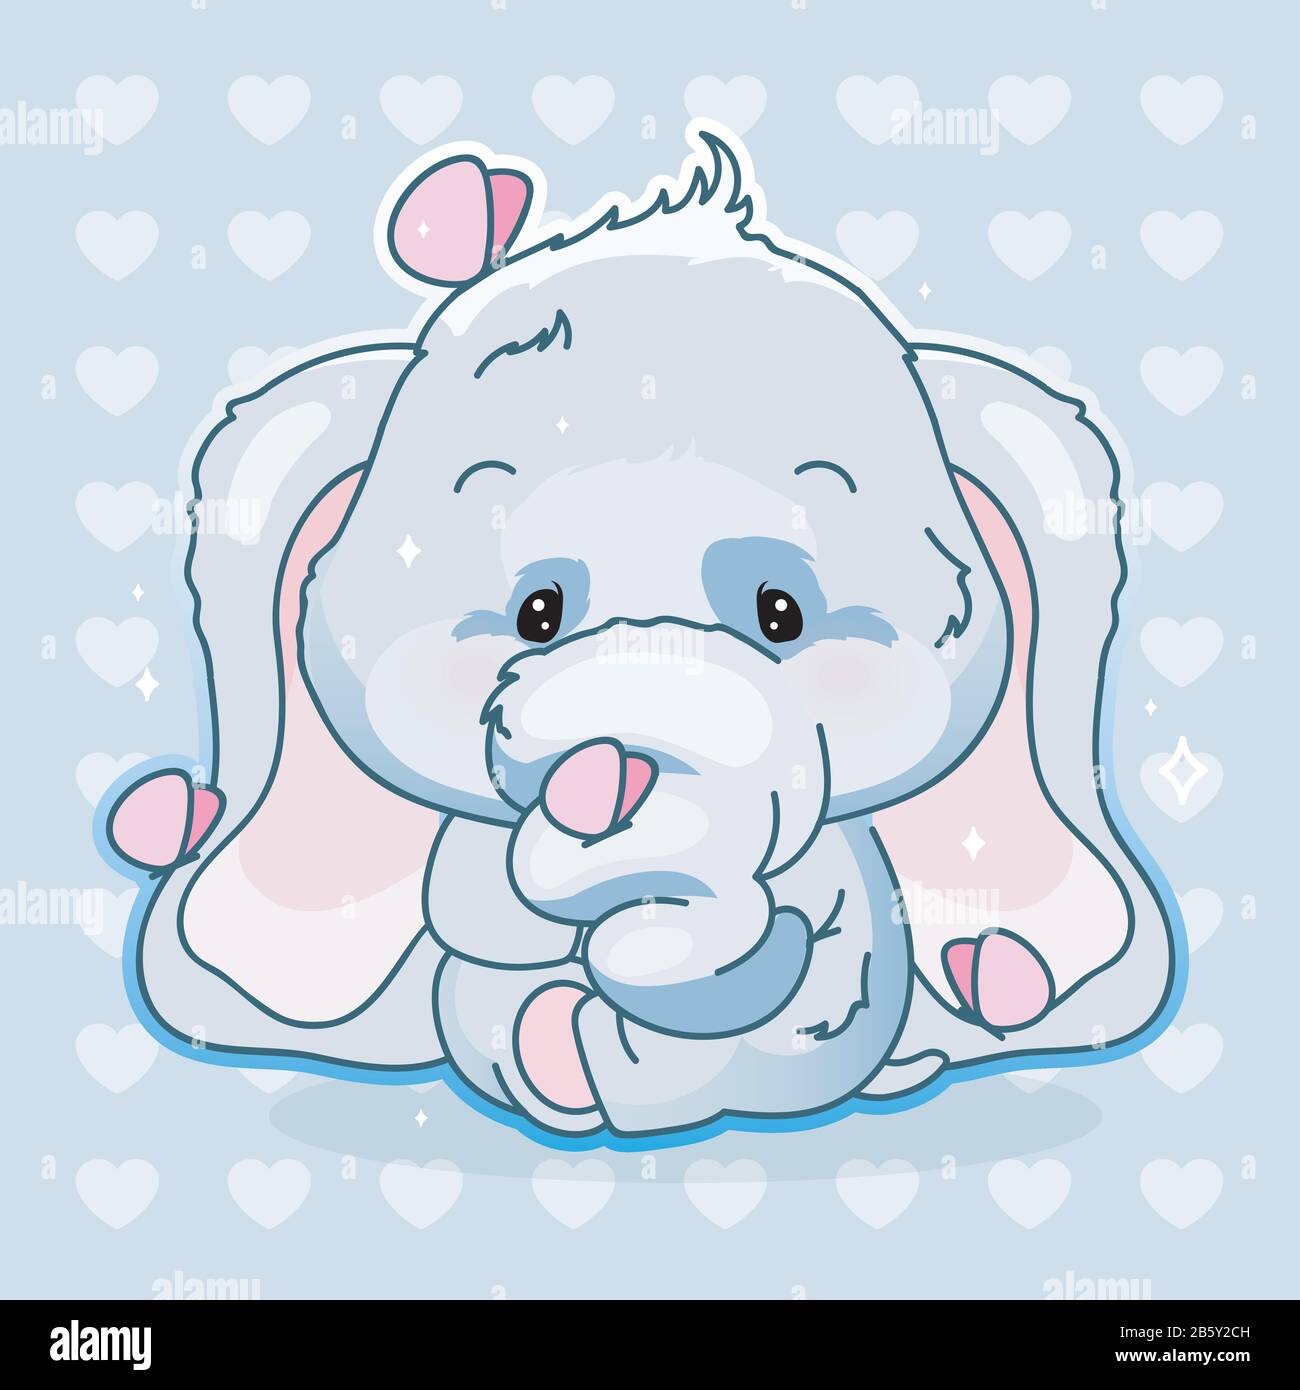 Cute Elephant Kawaii Cartoon Vector Character Adorable And Funny